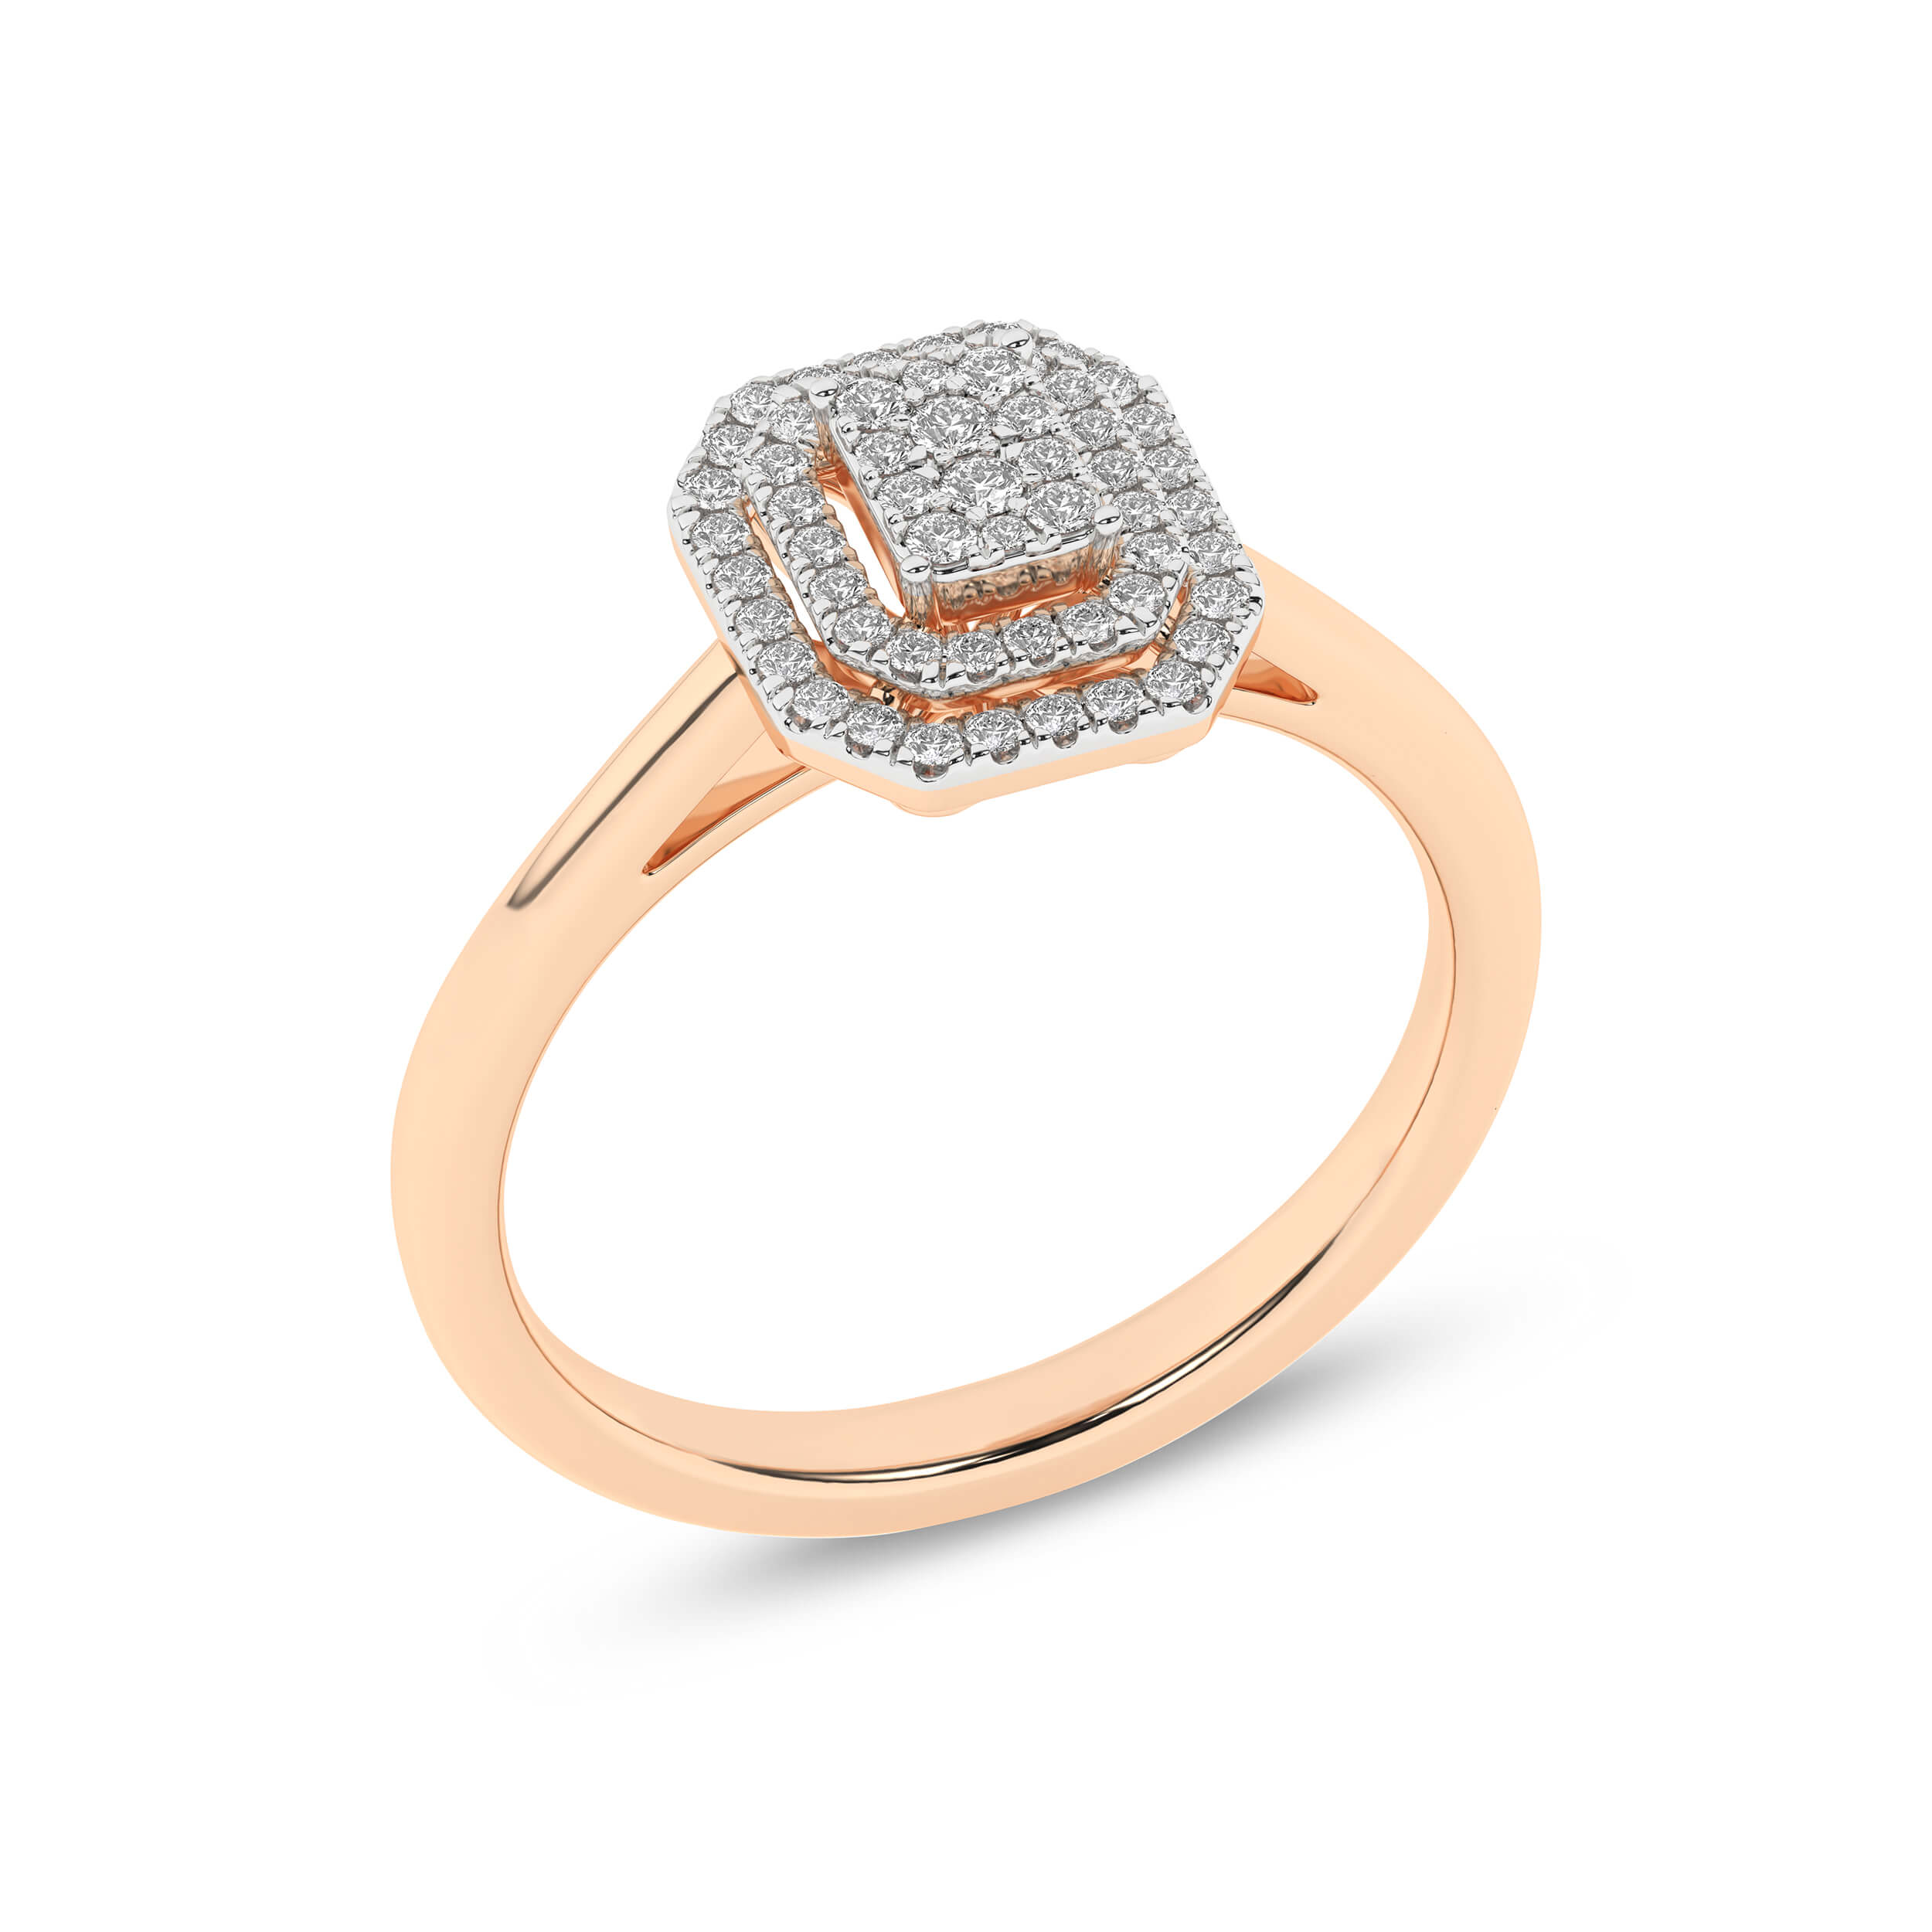 Inel din Aur Roz 18K cu Diamante 0.22Ct, articol RB21240EG, previzualizare foto 4